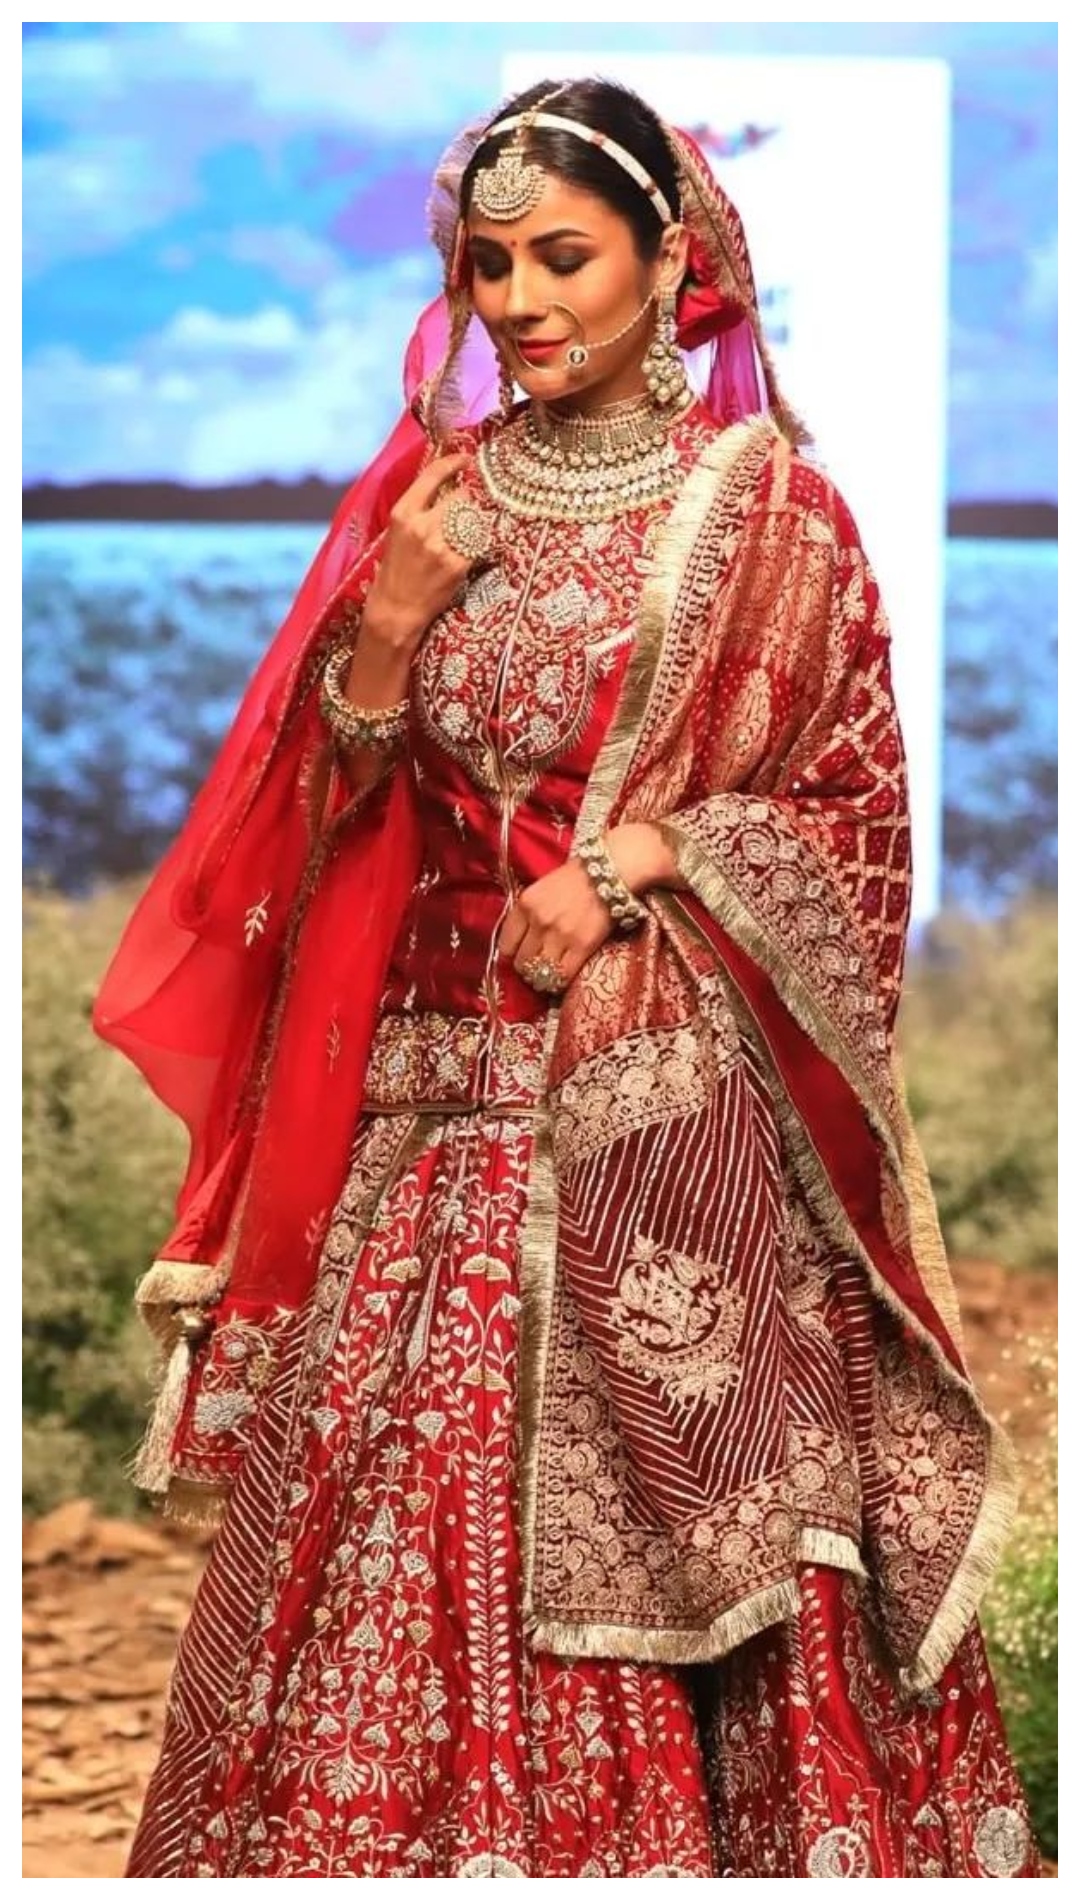 Shehnaaz Gill made her runway debut and looked effortlessly elegant as a Punjabi bride.